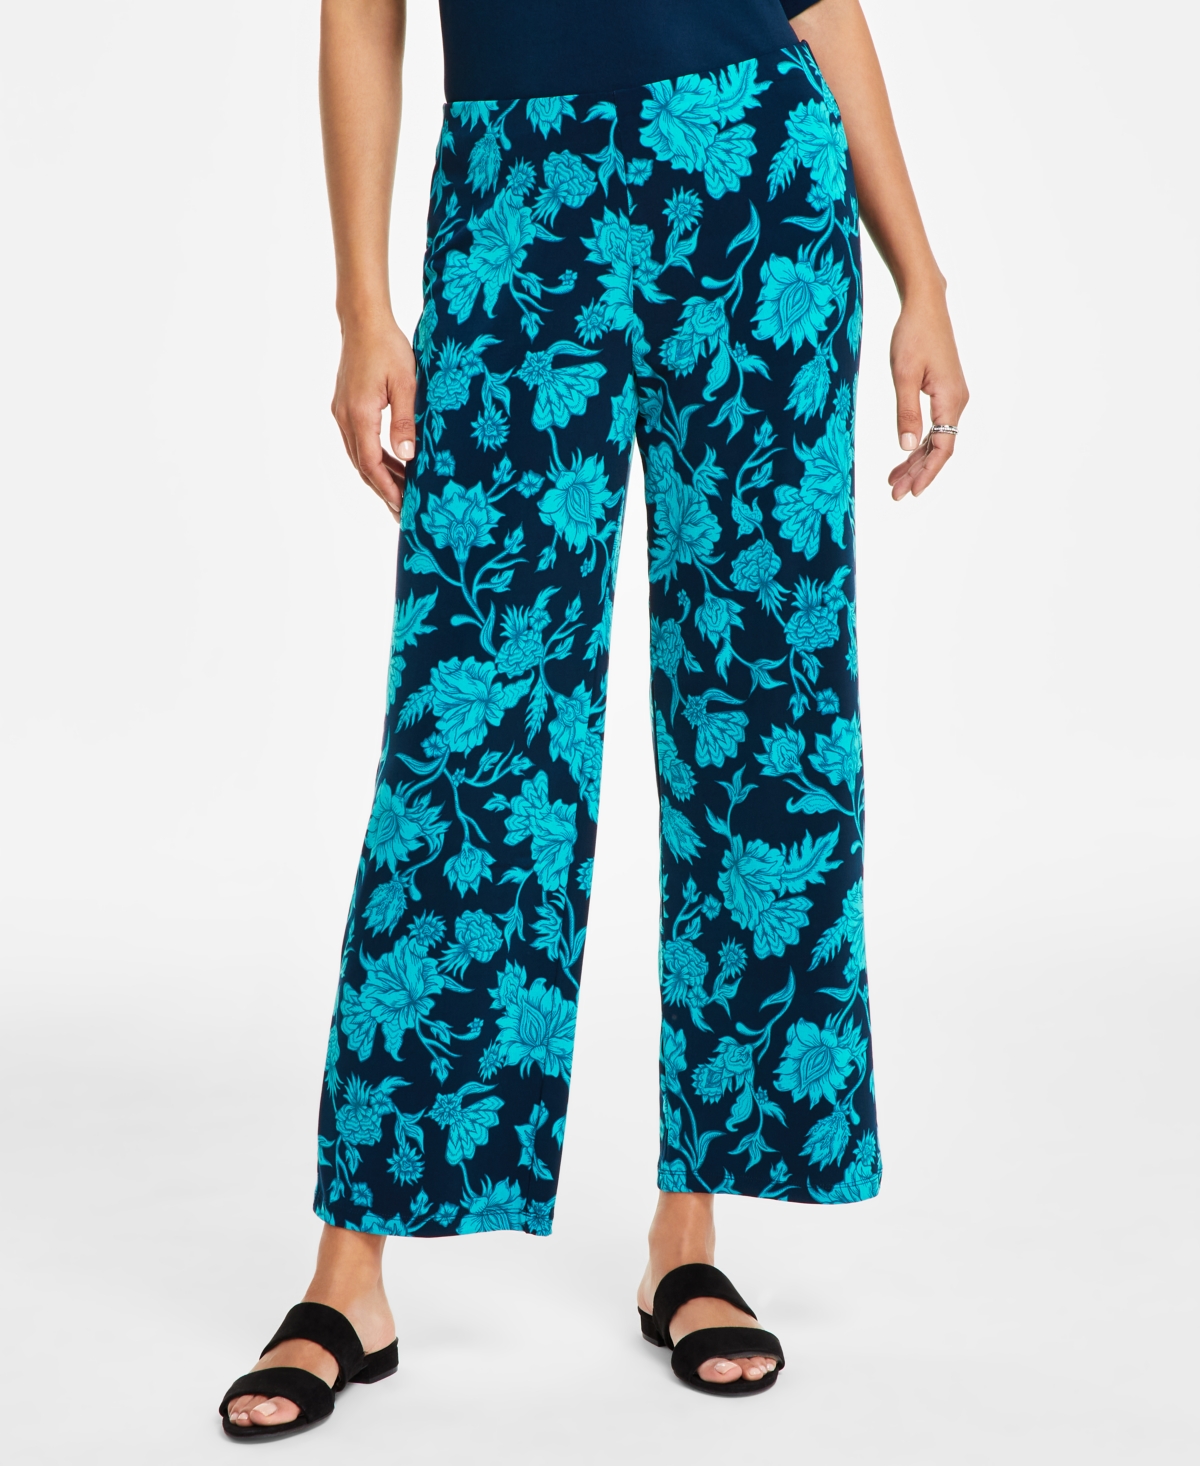 JM Collection Women's Plus Size Pockets Gauze Drawstring Pants Seafoam Blue